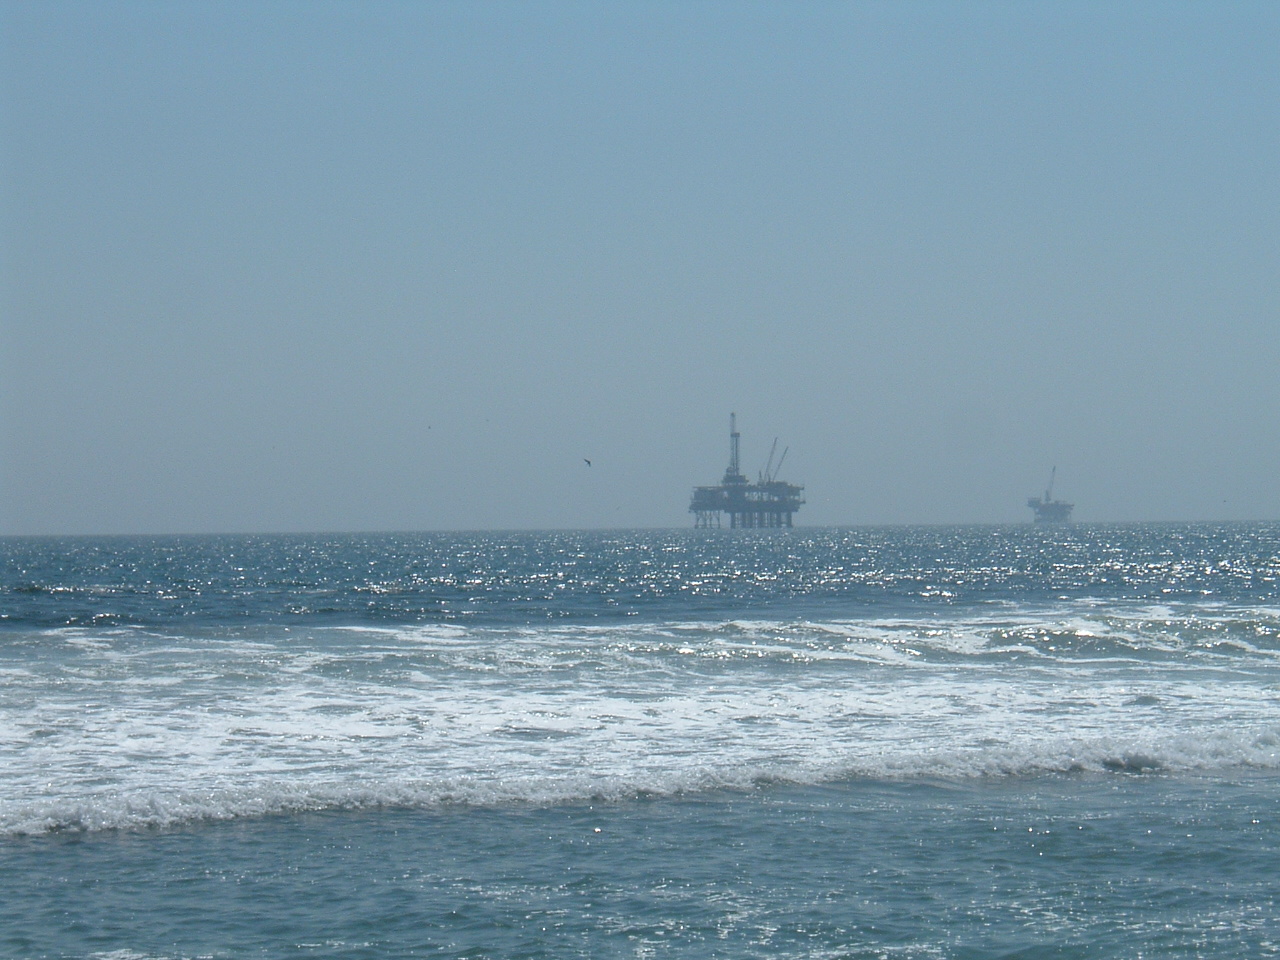 Oil rigs off the coast.